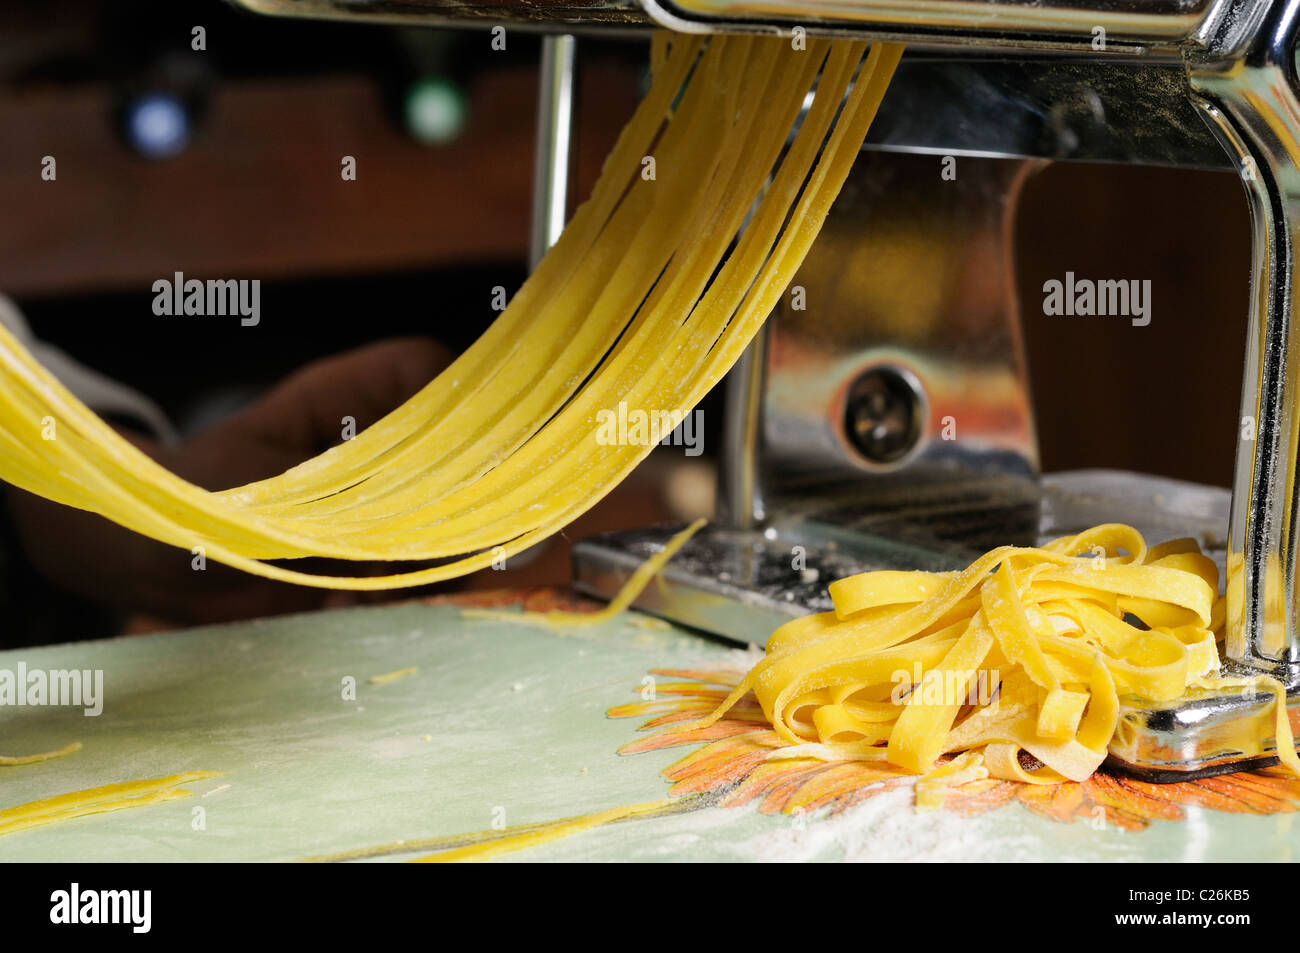 https://c8.alamy.com/comp/C26KB5/stock-photo-of-a-pasta-machine-rolling-out-tagliatelle-pasta-C26KB5.jpg